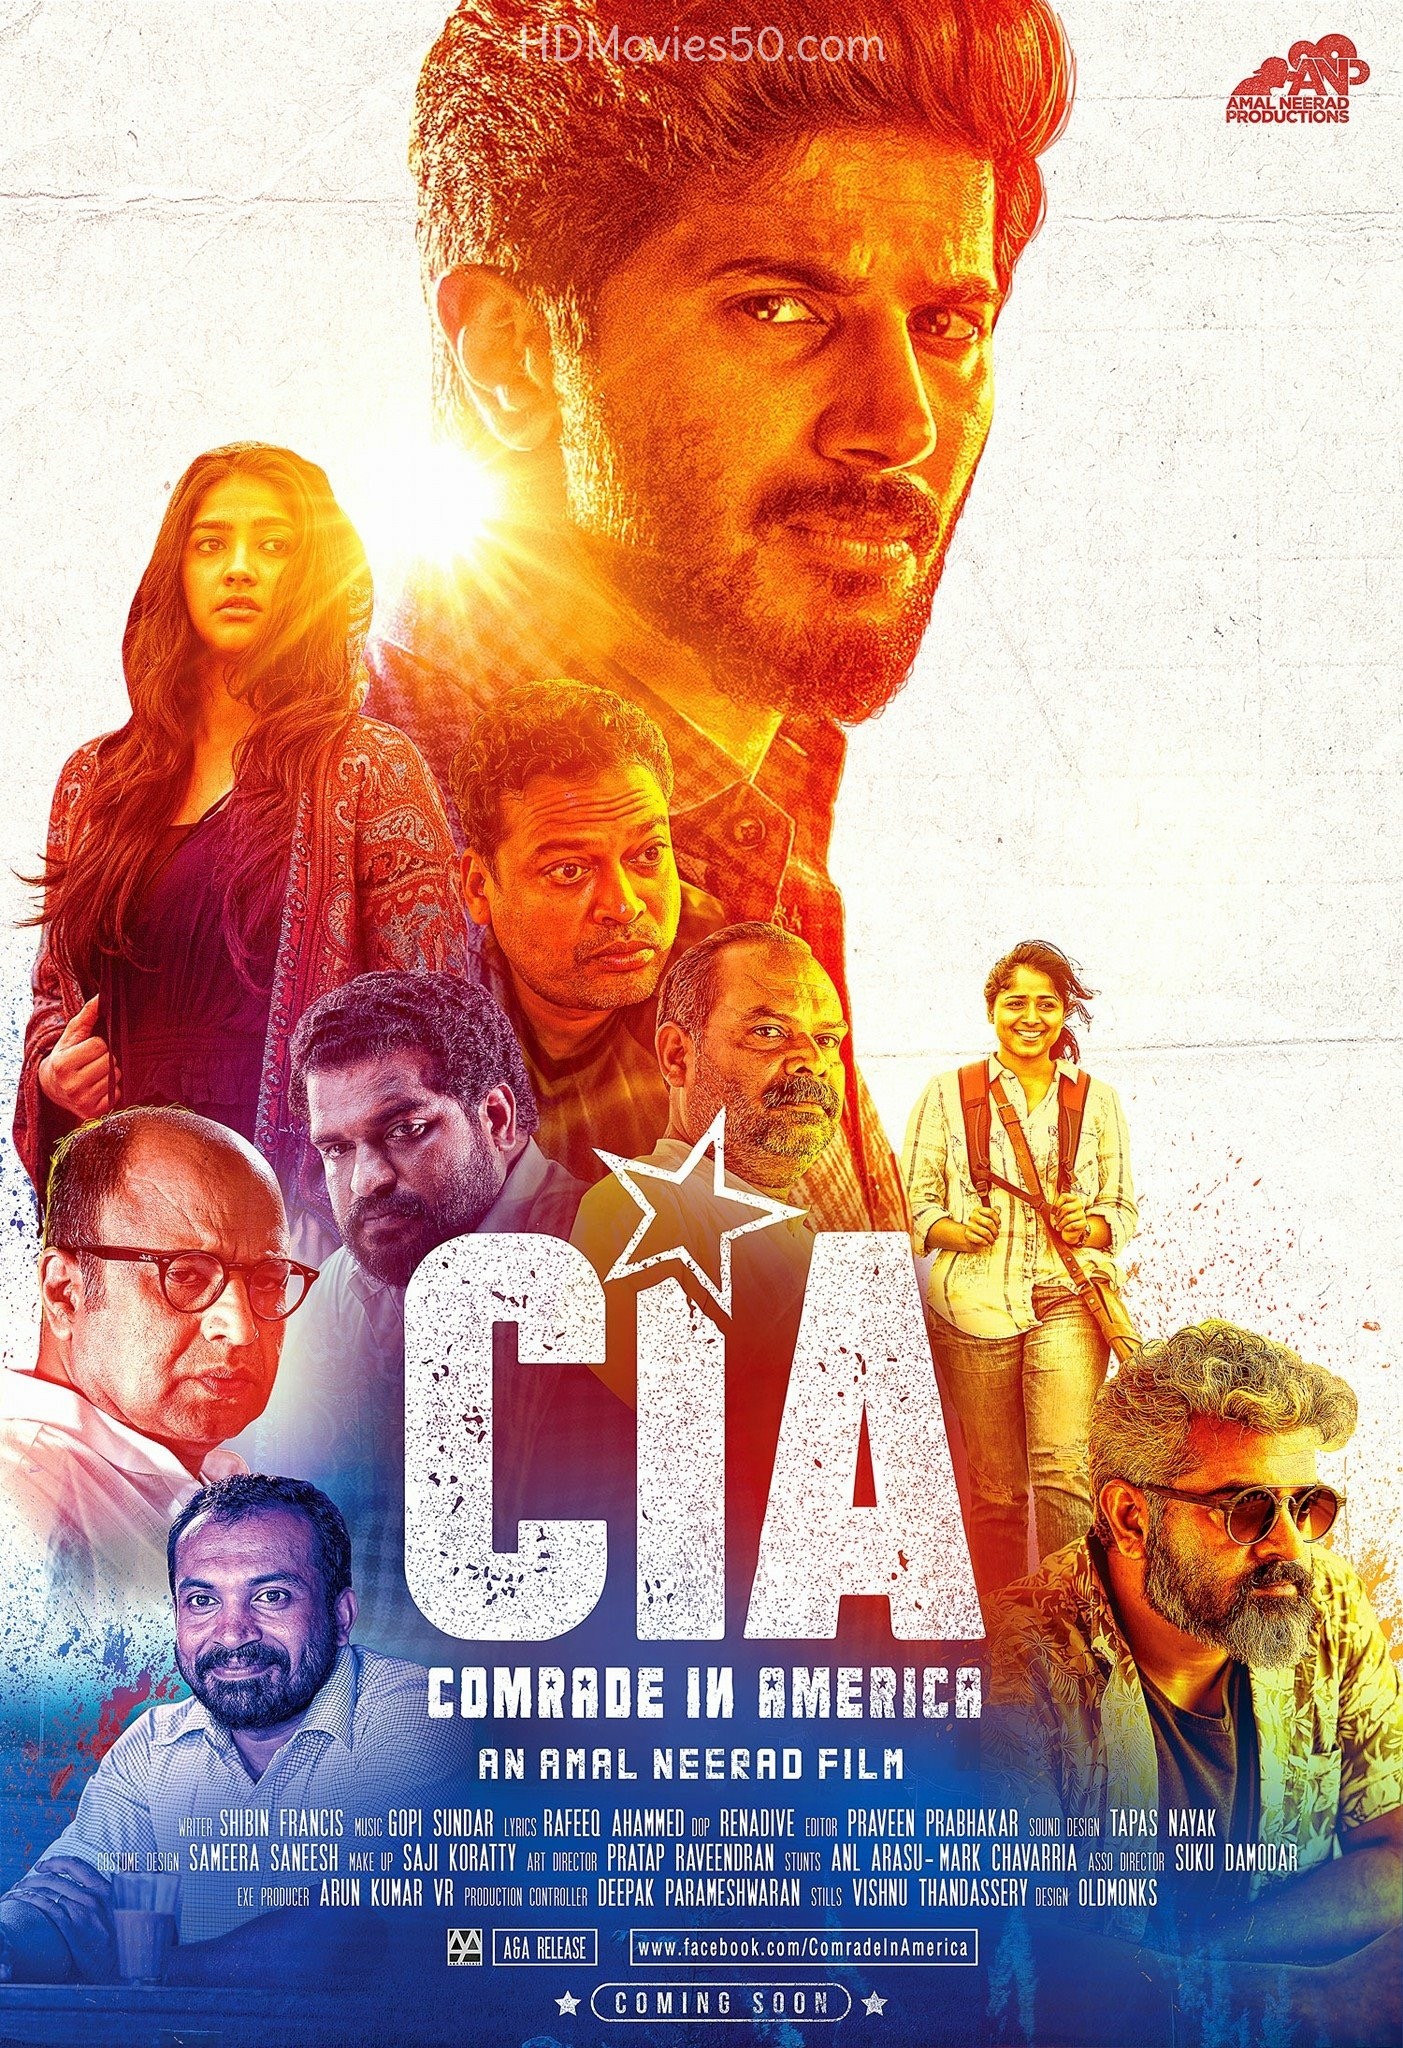 Cia (Comrade in America) 2022 Hindi Dubbed (Unofficial) 1080p HDRip 2.4GB Download